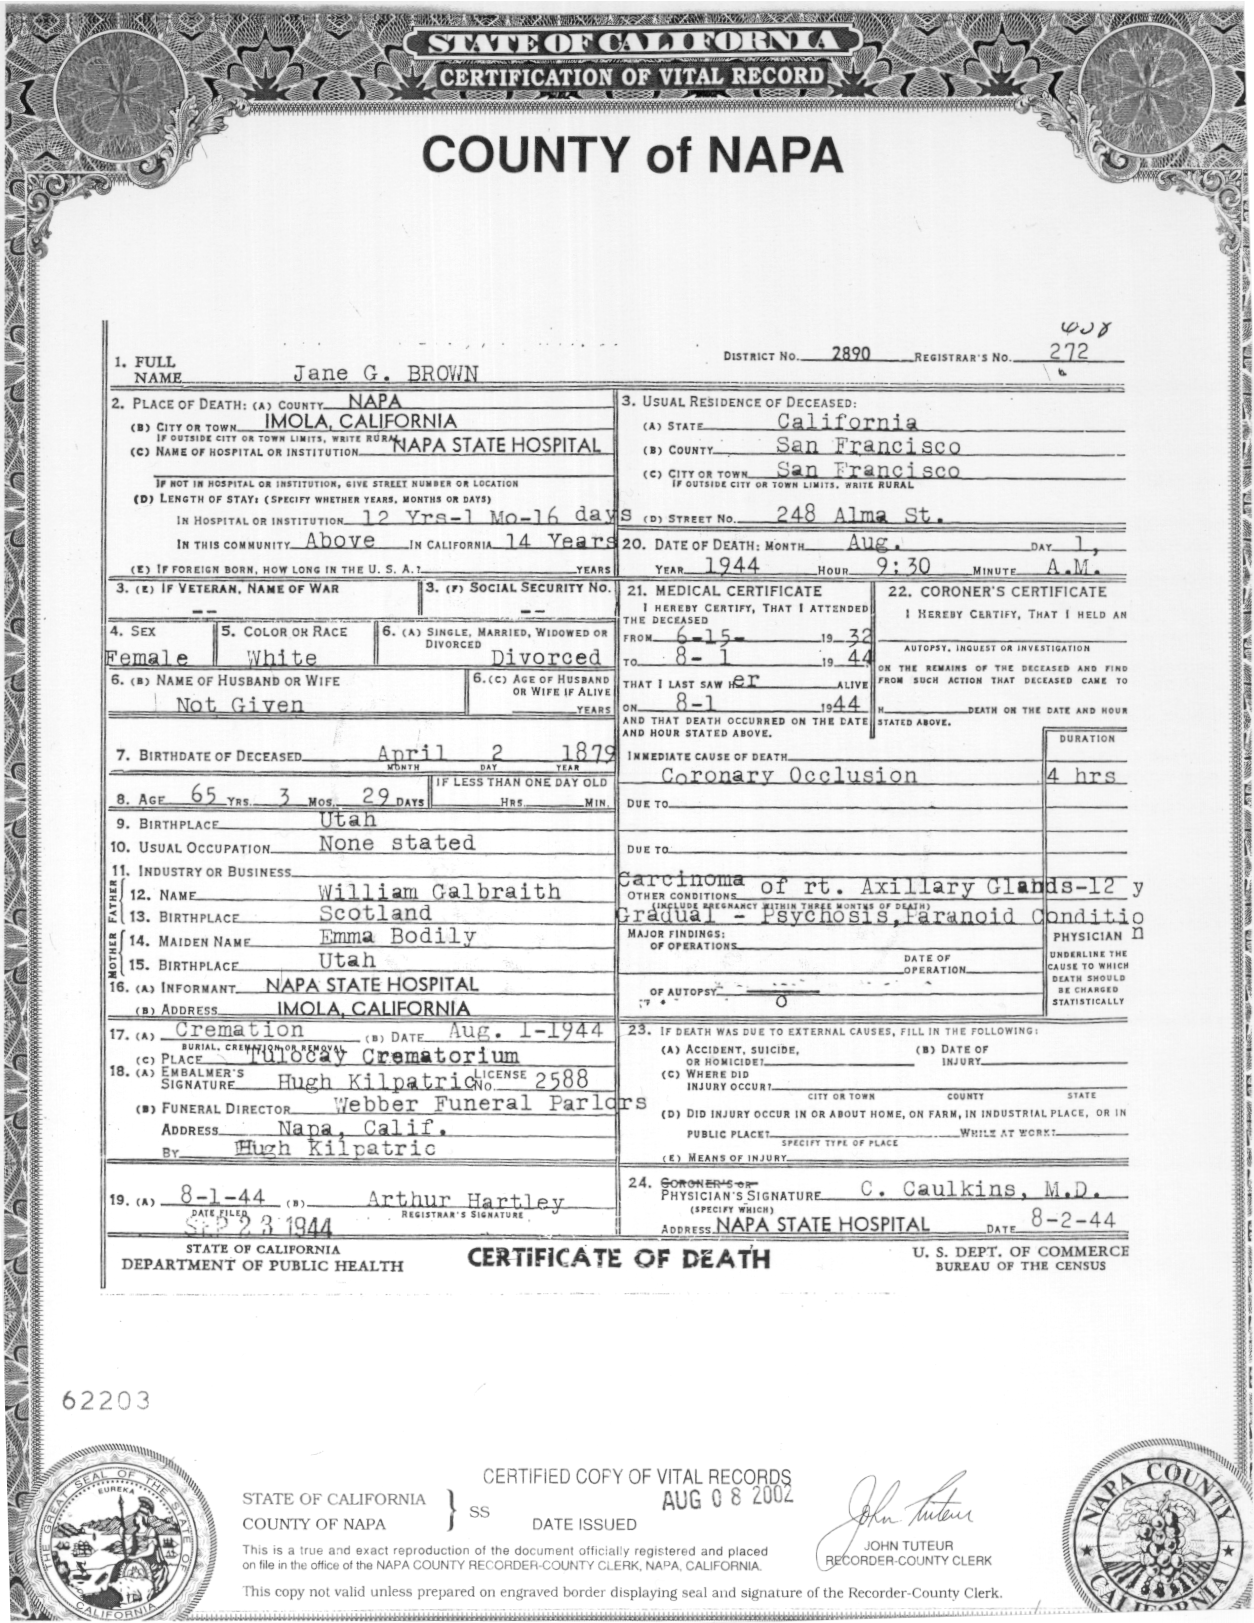 Jane Bodily Galbraith Brown's Death Certificate 1879-1944